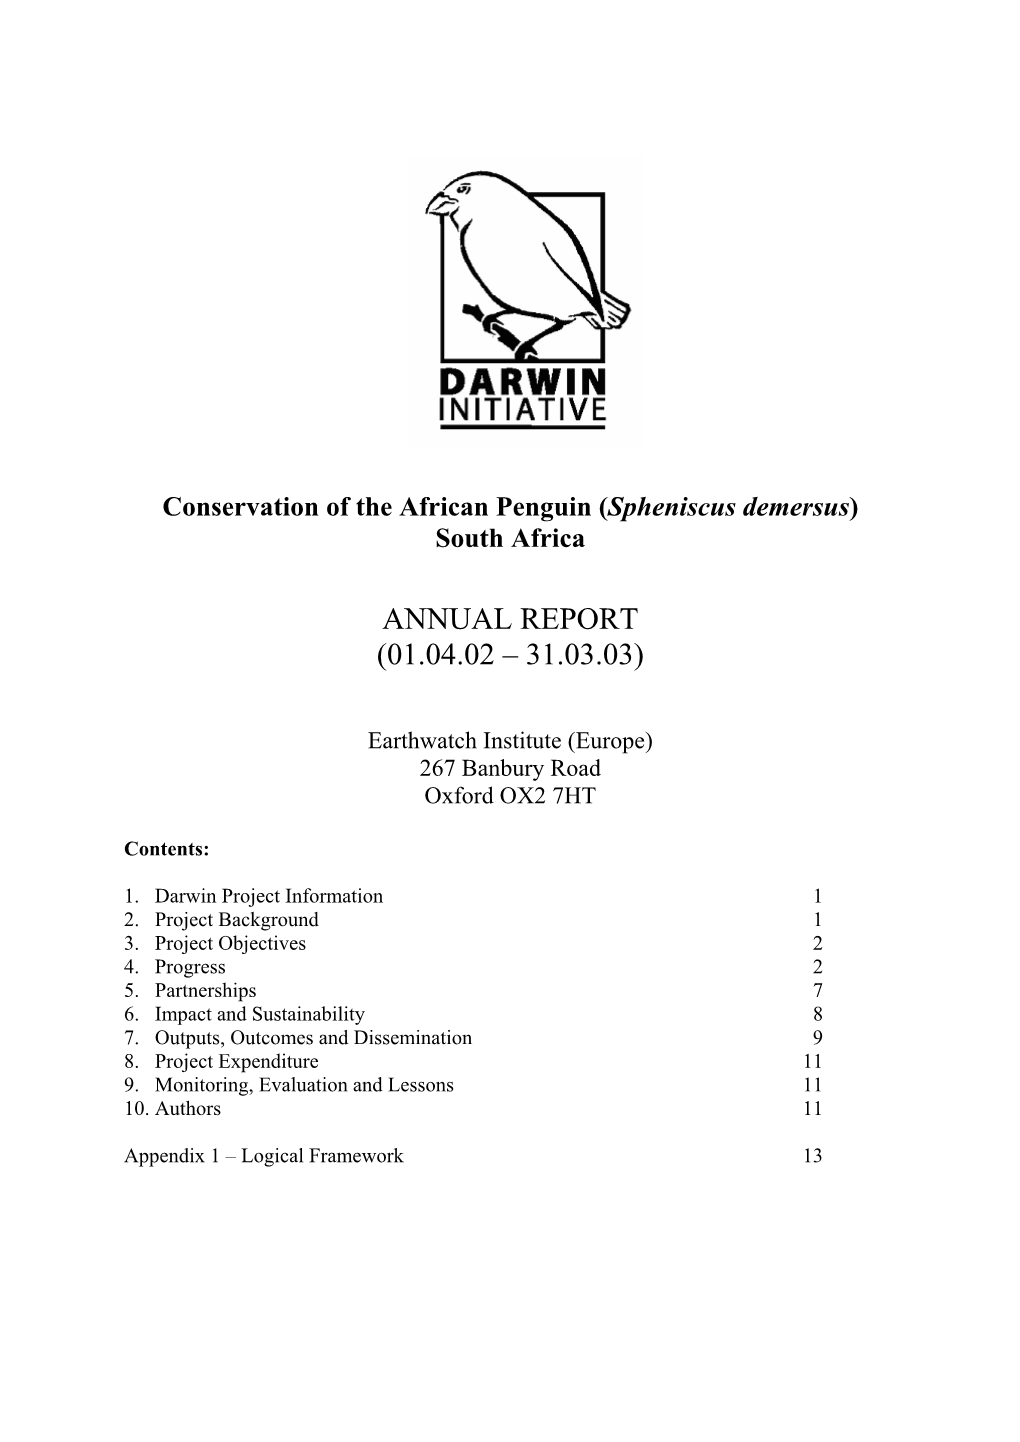 Annual Report (01.04.02 – 31.03.03)